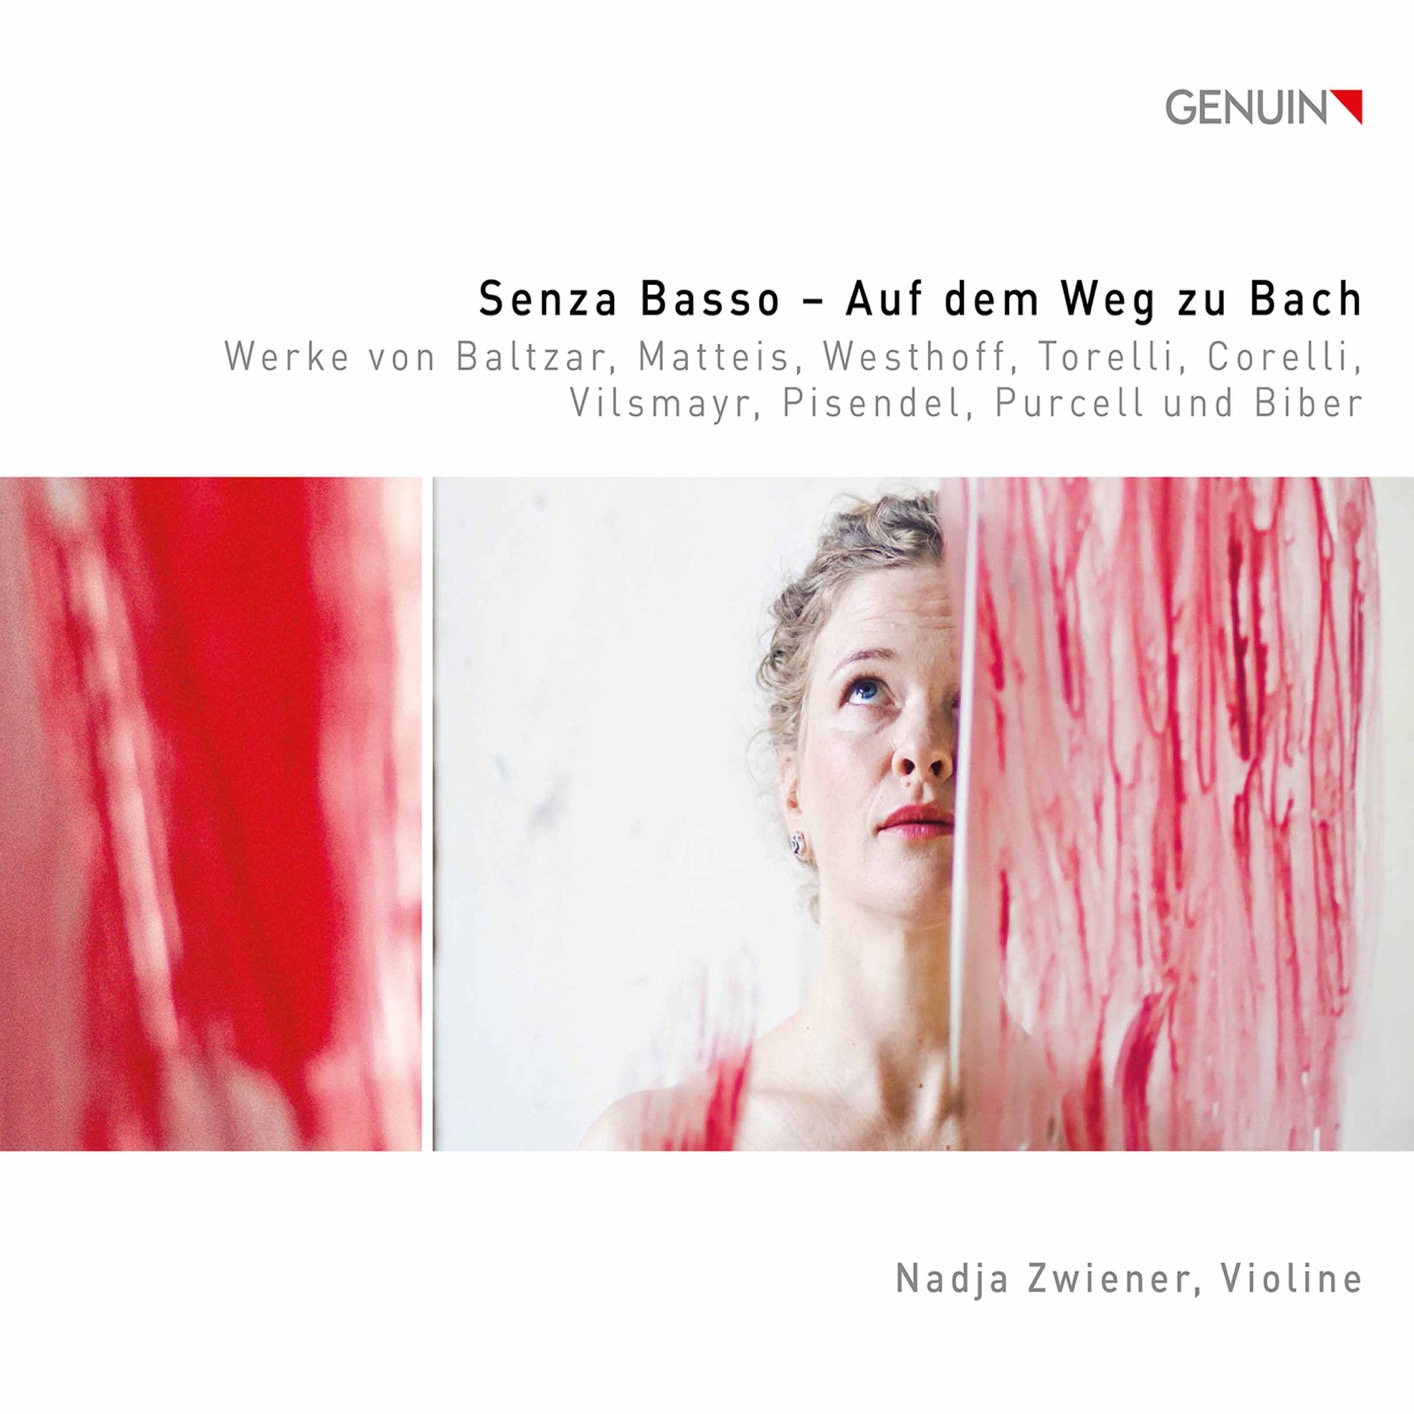 Nadja Zwiener - Senza basso: Auf dem Weg zu Bach (2021) [FLAC 24bit/96kHz]